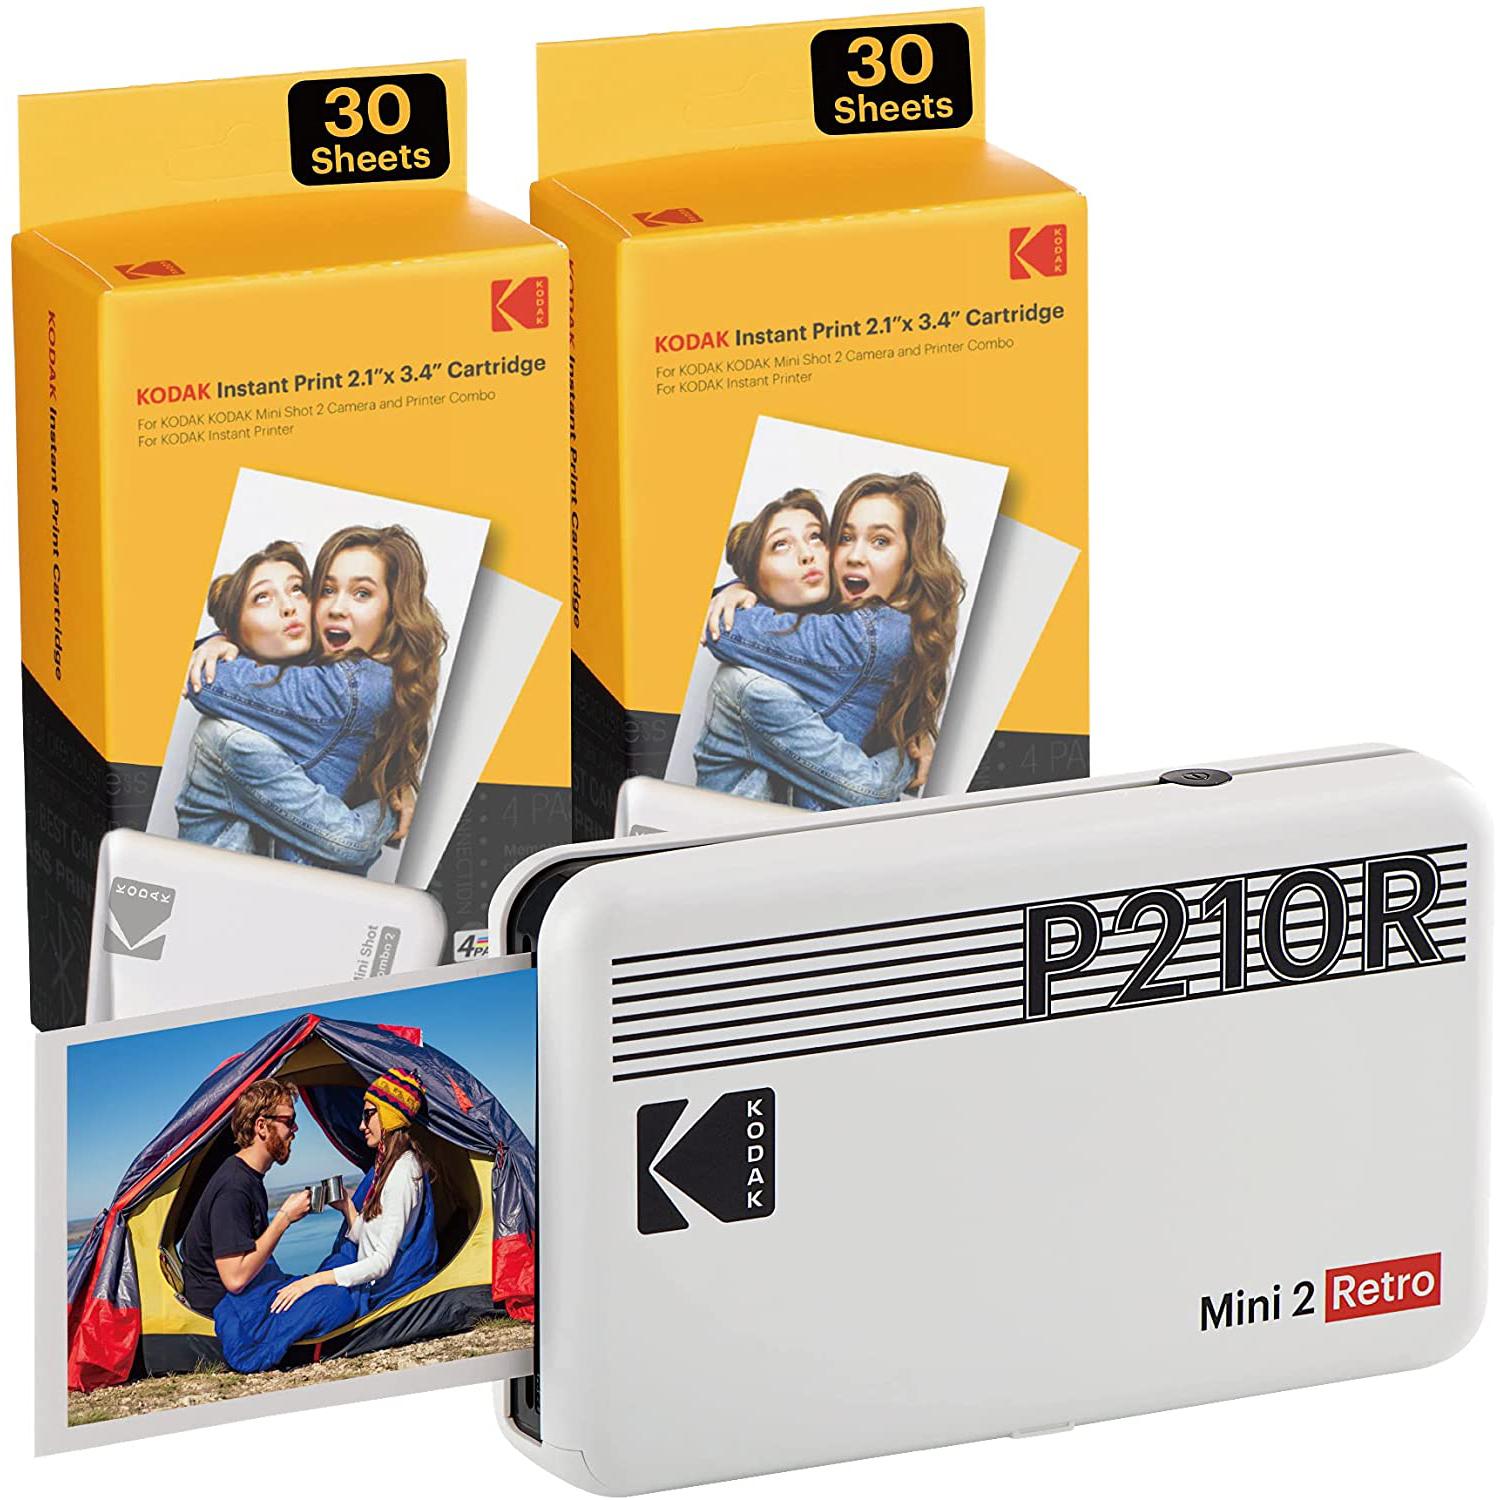 Kodak Mini 2 Retro 2.1x3.4 Portable Photo Printer for $83.19 Shipped